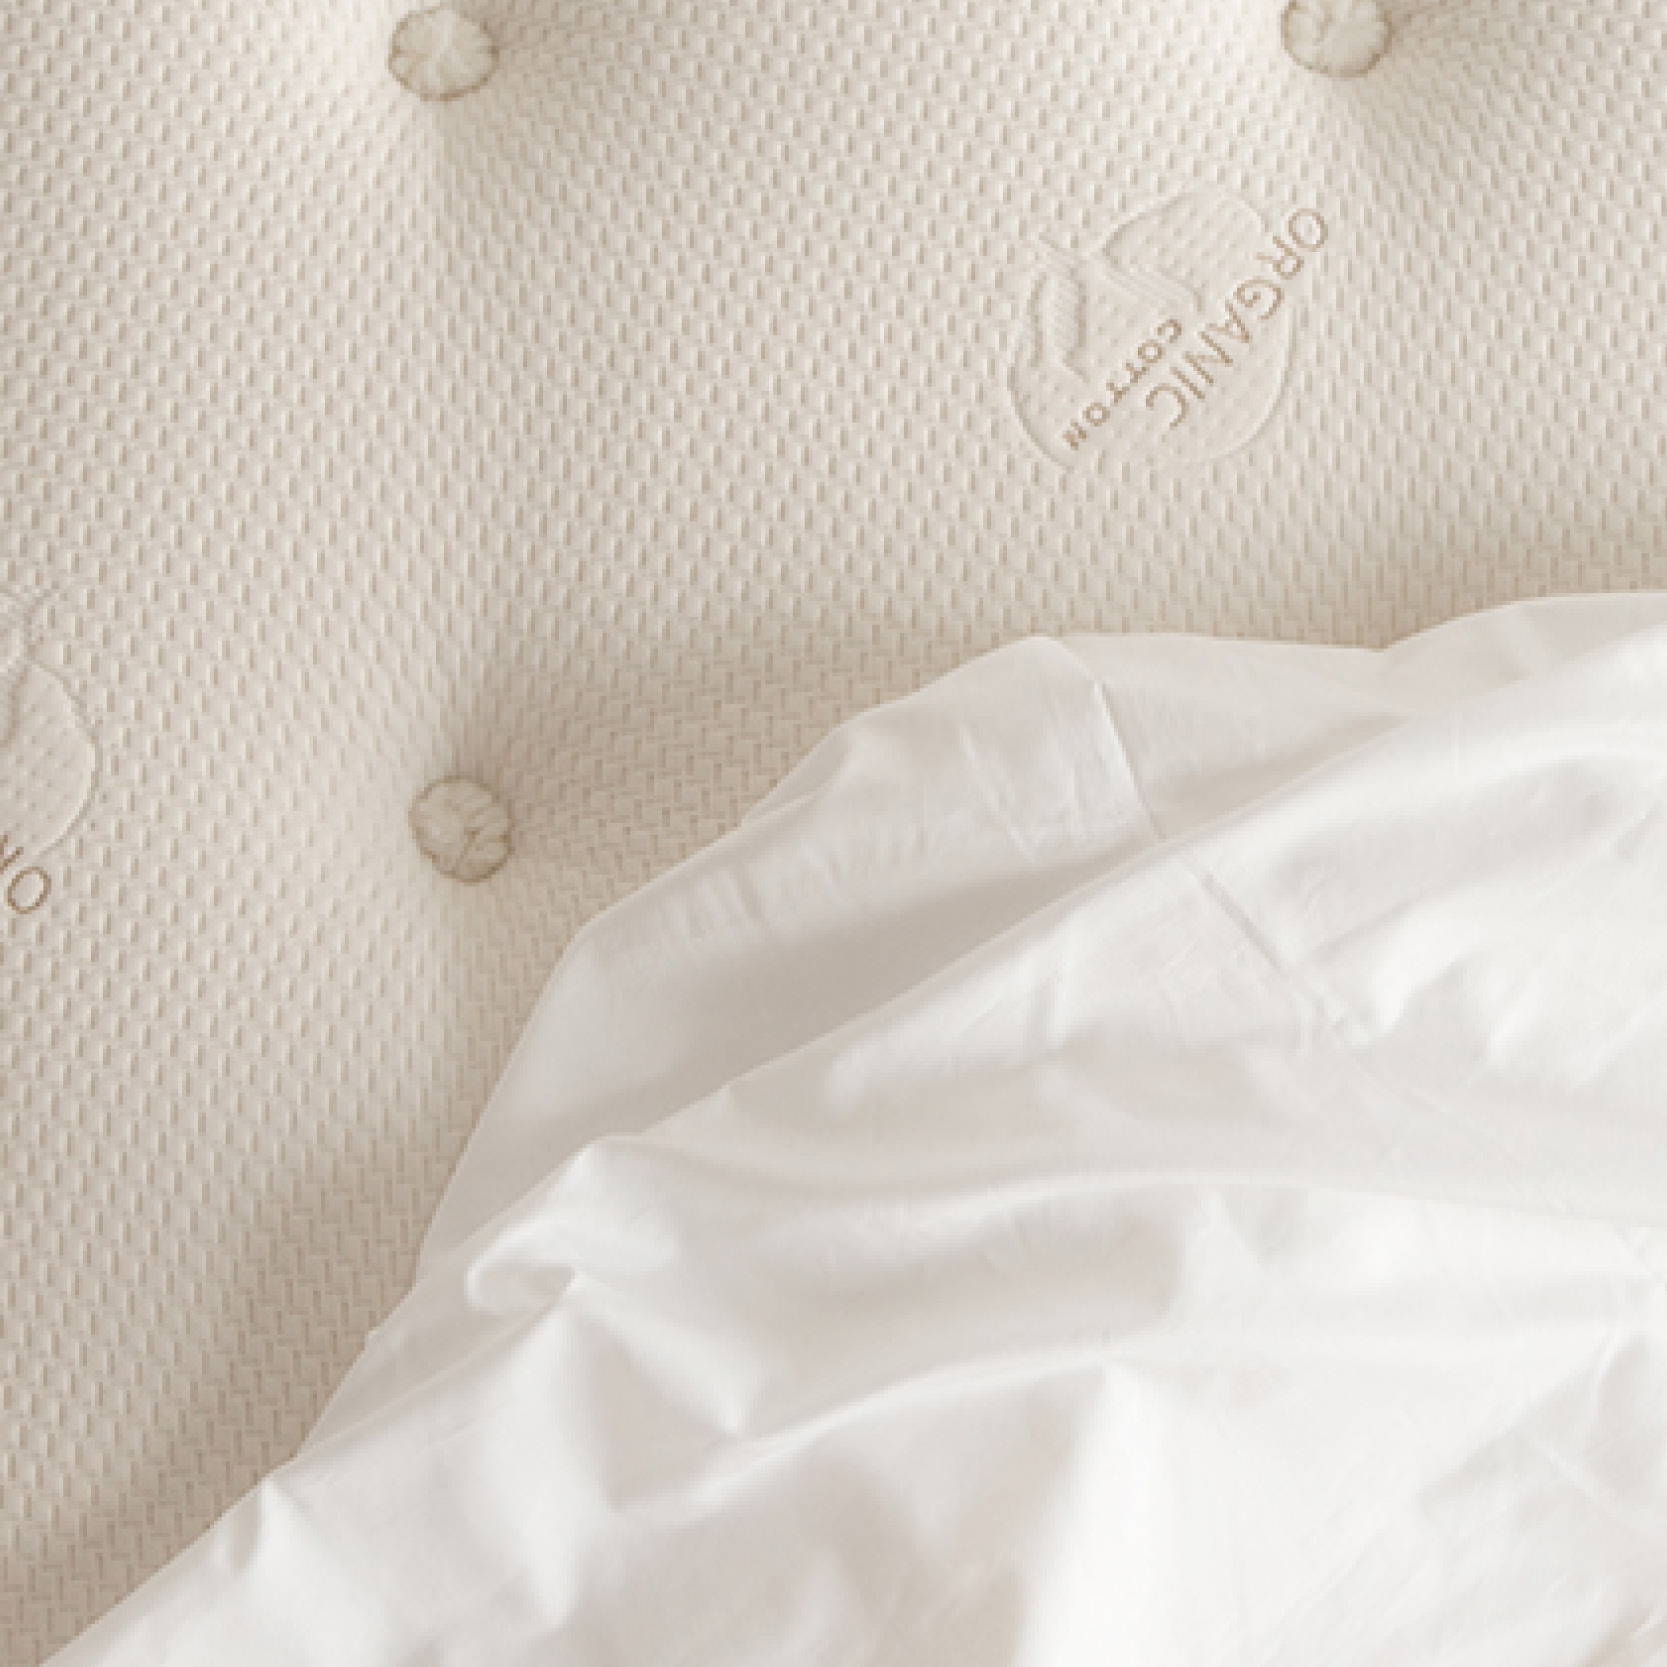 Close up of organic cotton mattress top and sheet. Image